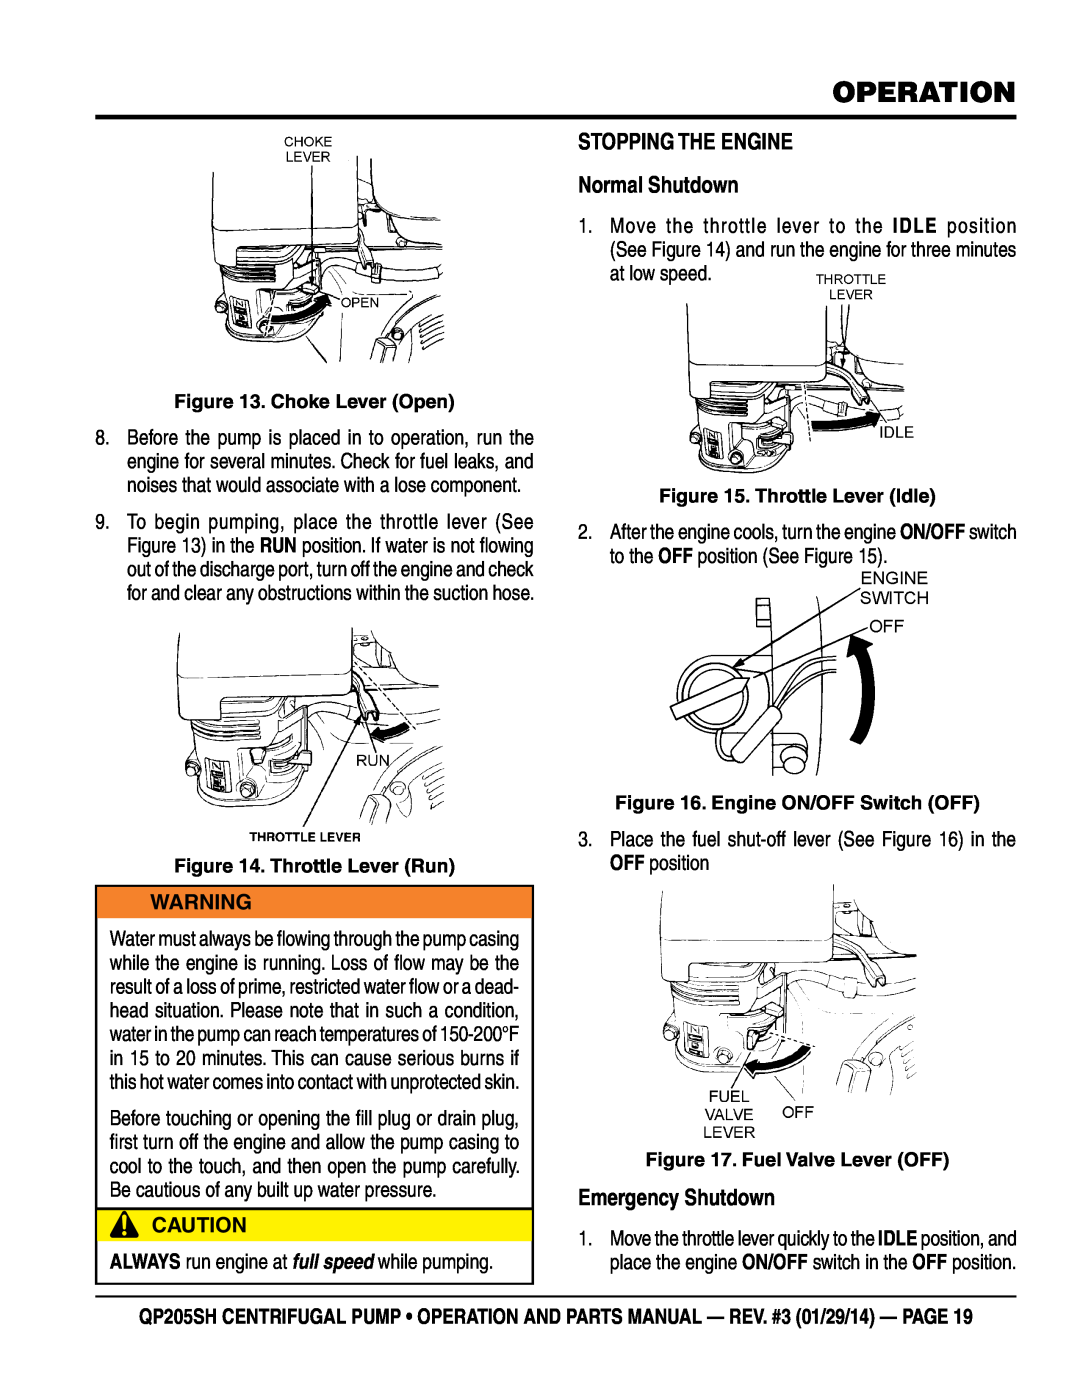 Honda Power Equipment QP205SH manual STOPPING THE ENGINE Normal Shutdown, Emergency Shutdown, Operation 